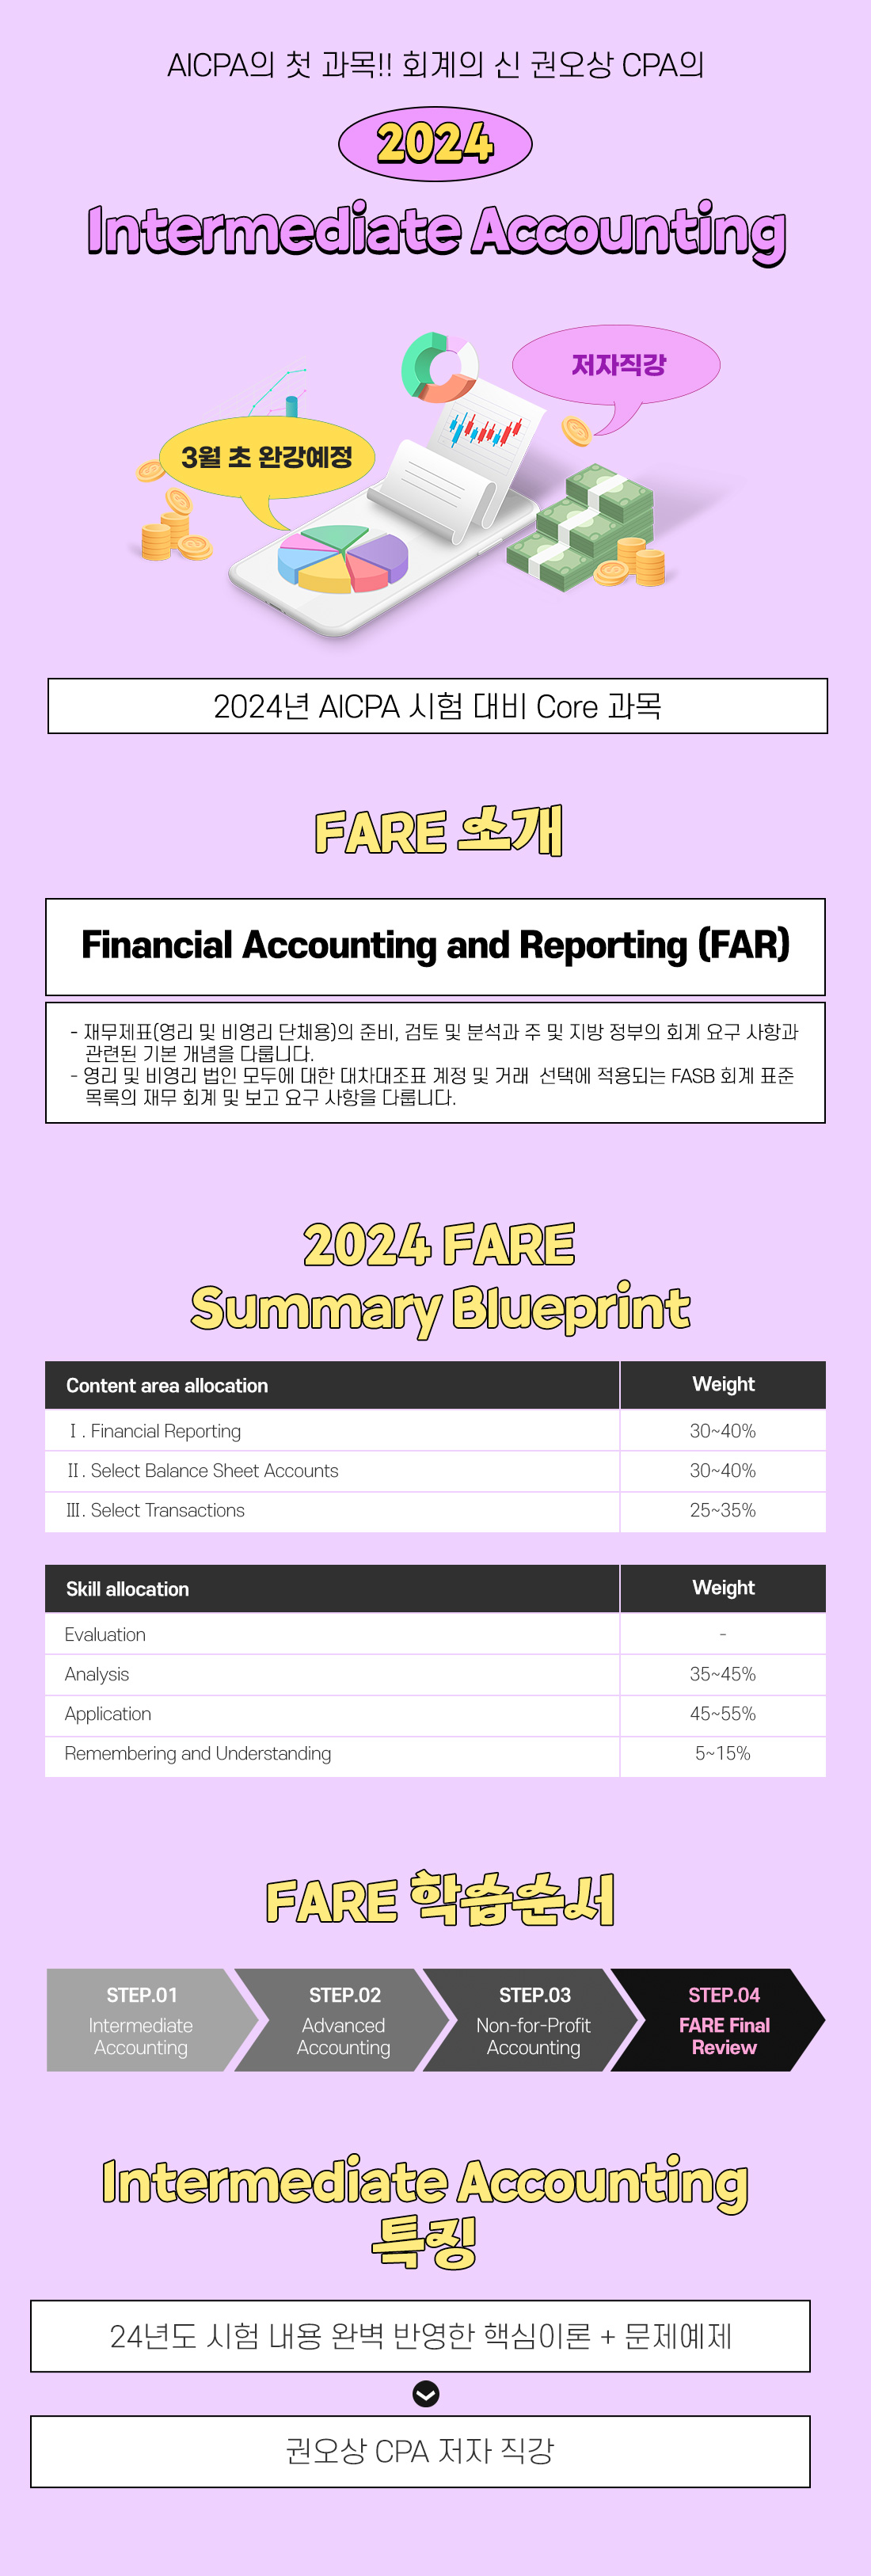 AICPA_FARE_Intermediate Accounting